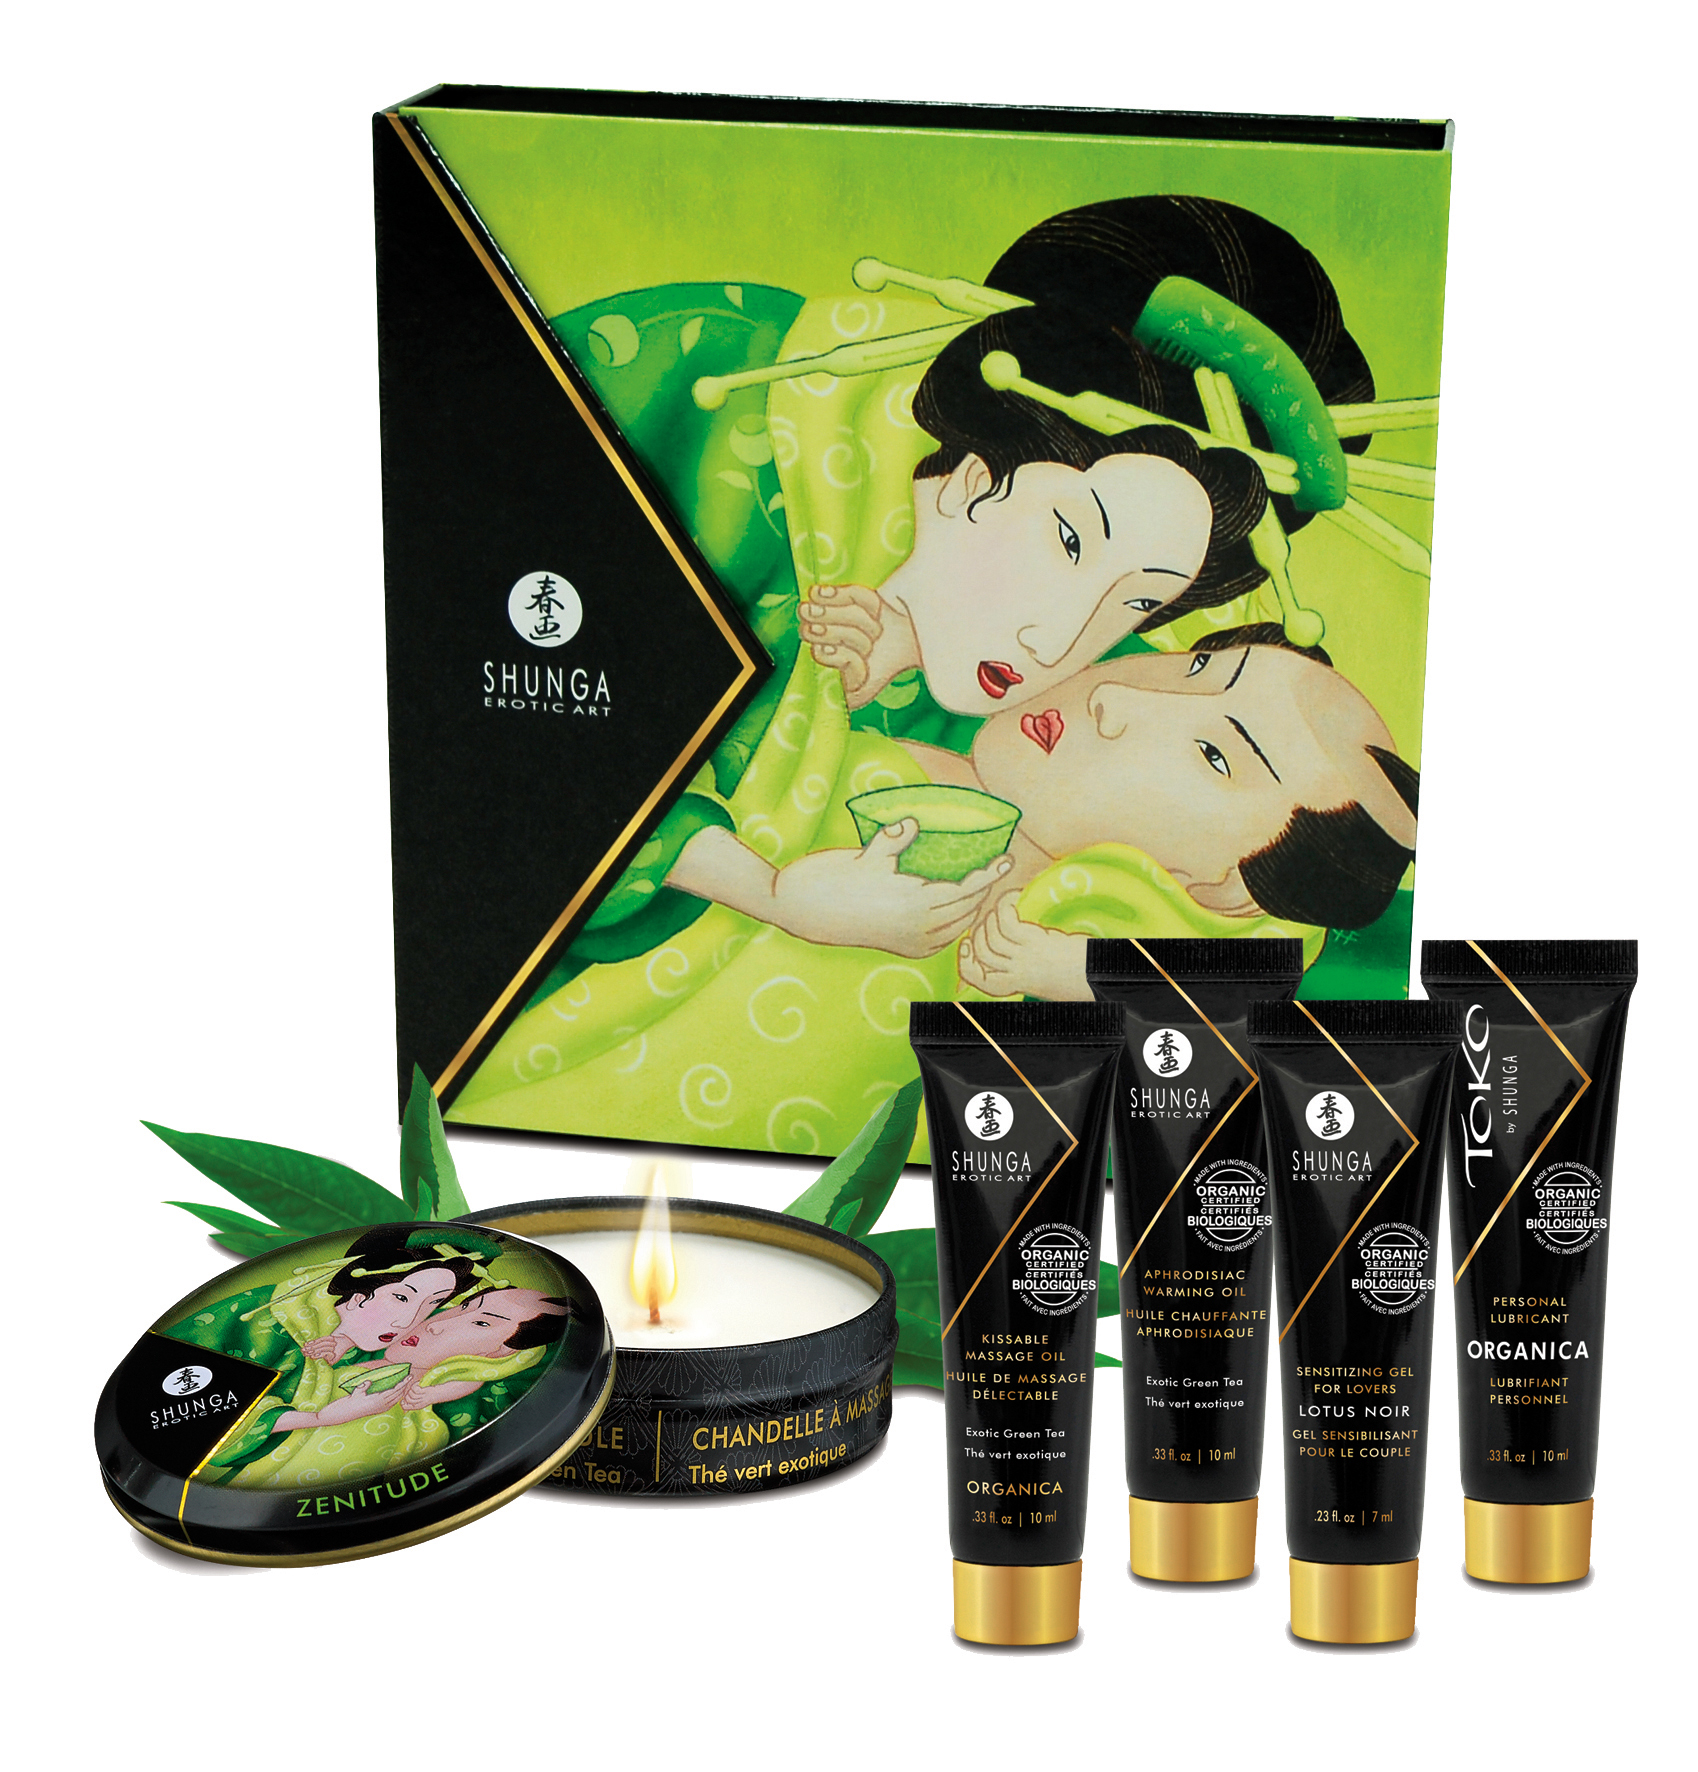 SHUNGA Geisha's Secret Collection Organica